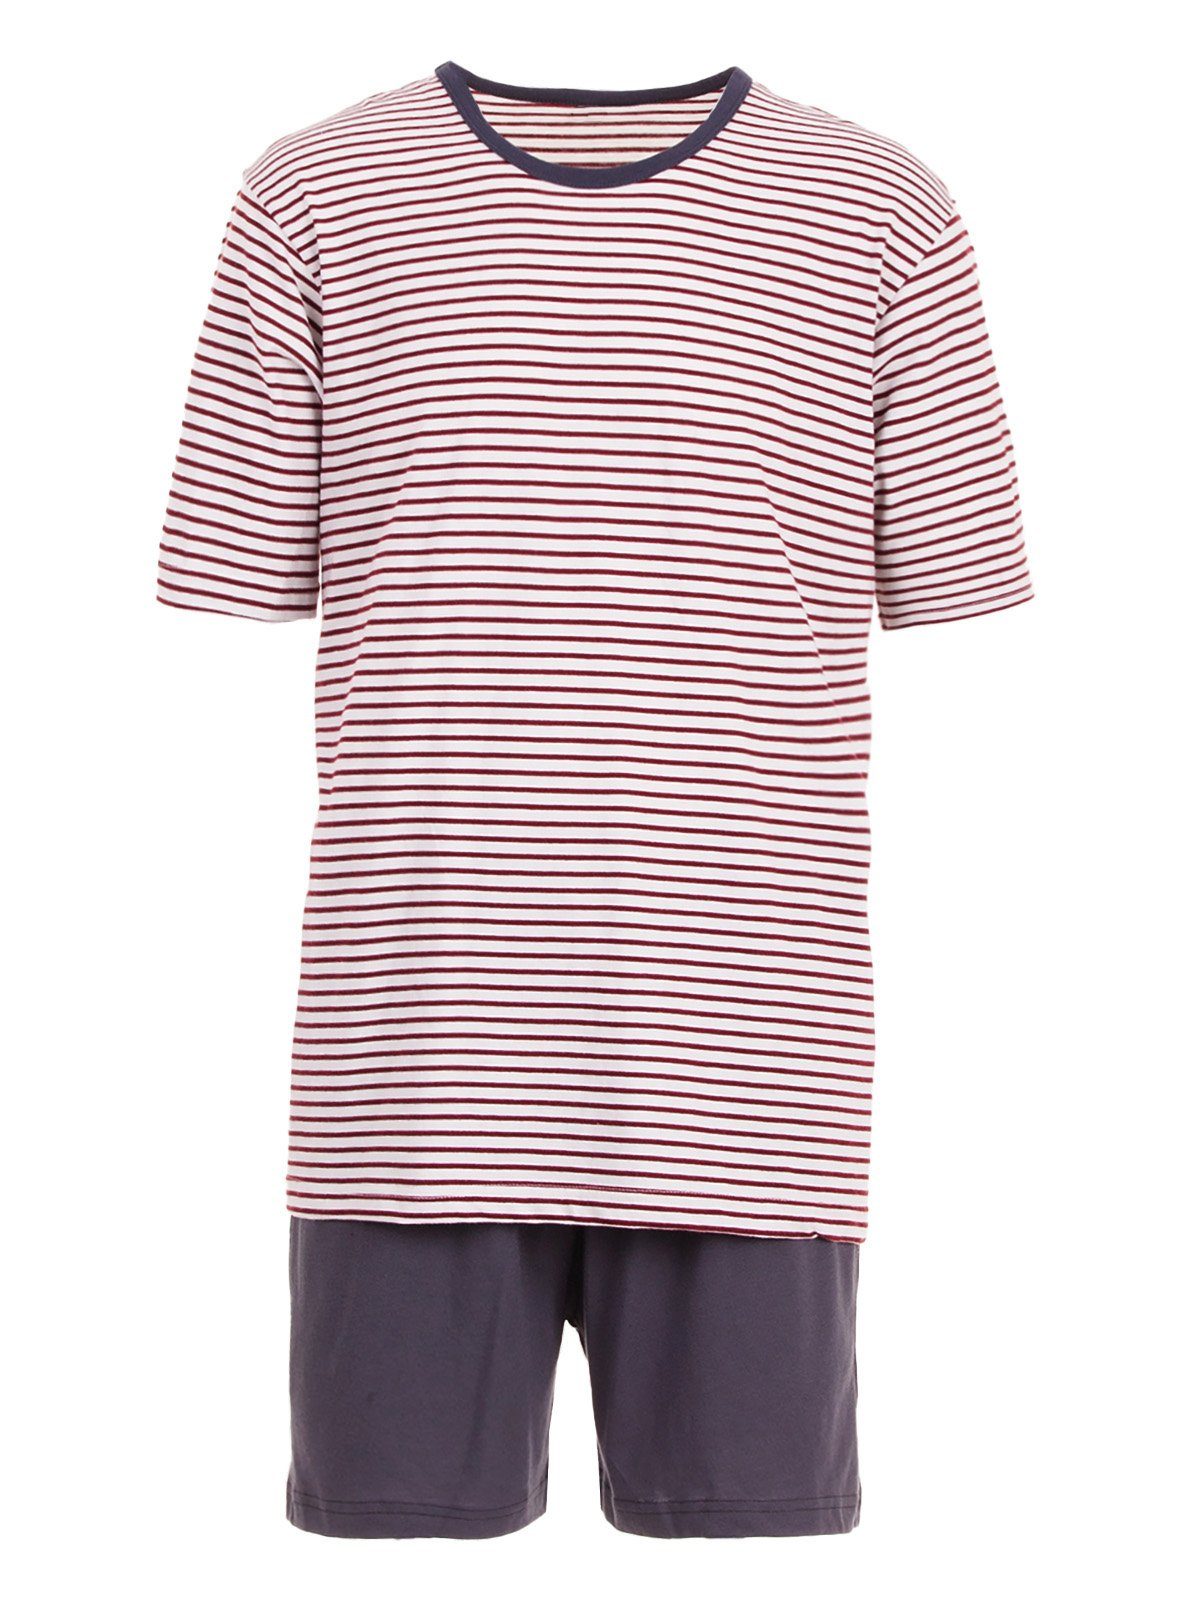 Gestreift bordeaux Shorty - Schlafanzug Terre Henry Pyjama Set